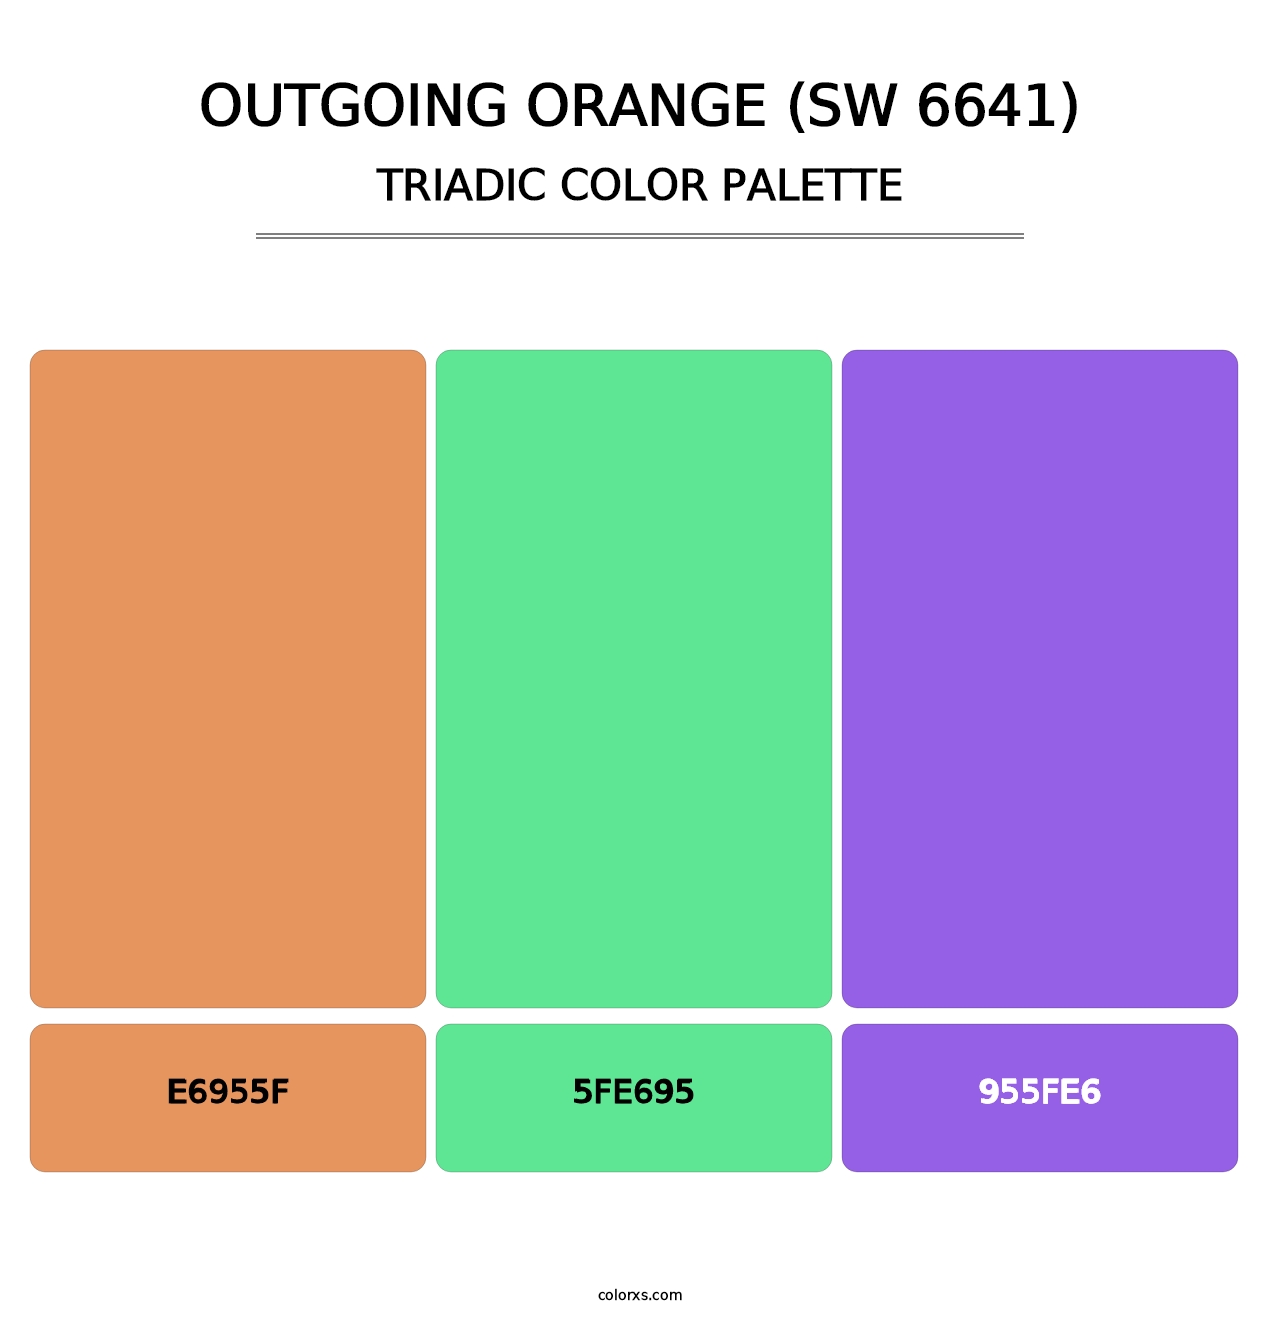 Outgoing Orange (SW 6641) - Triadic Color Palette